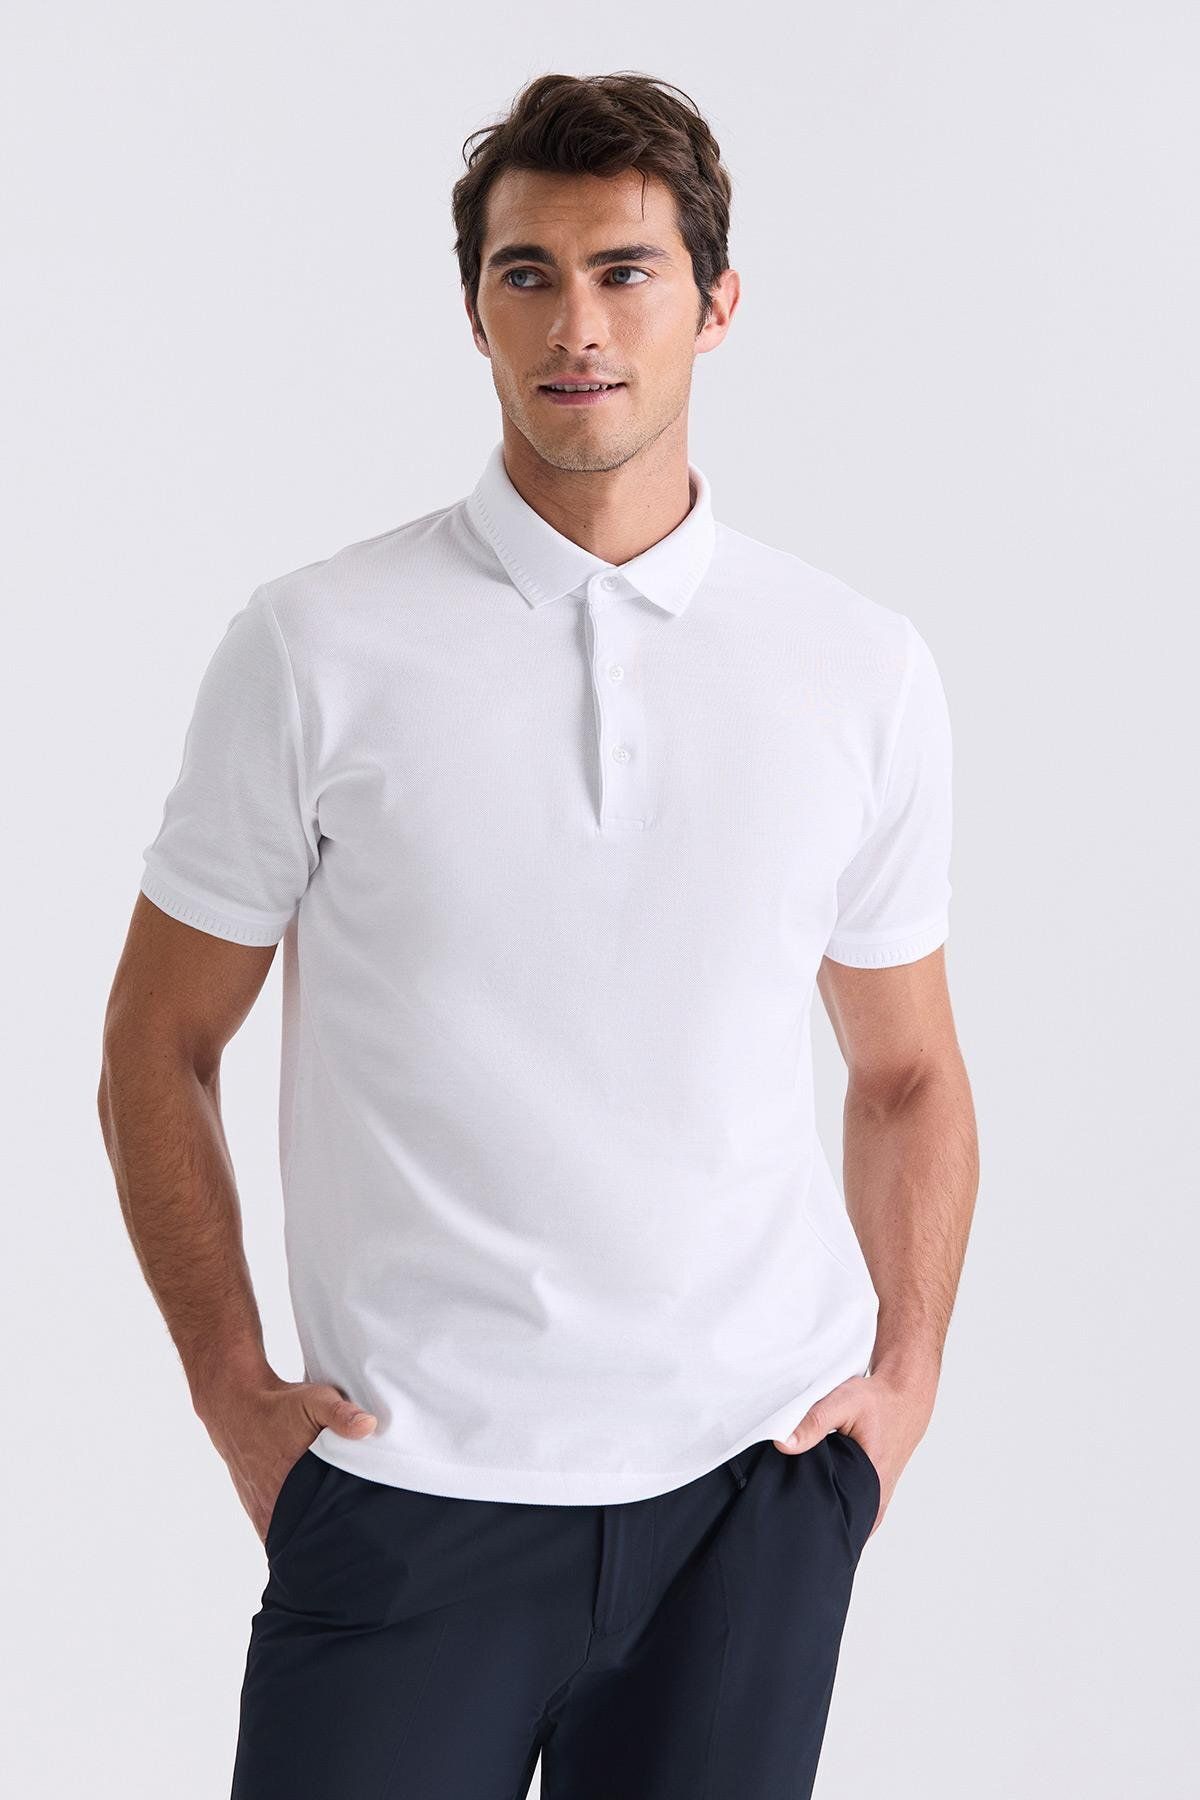 Jakamen Beyaz Slim Fit Polo Yaka T-shirt